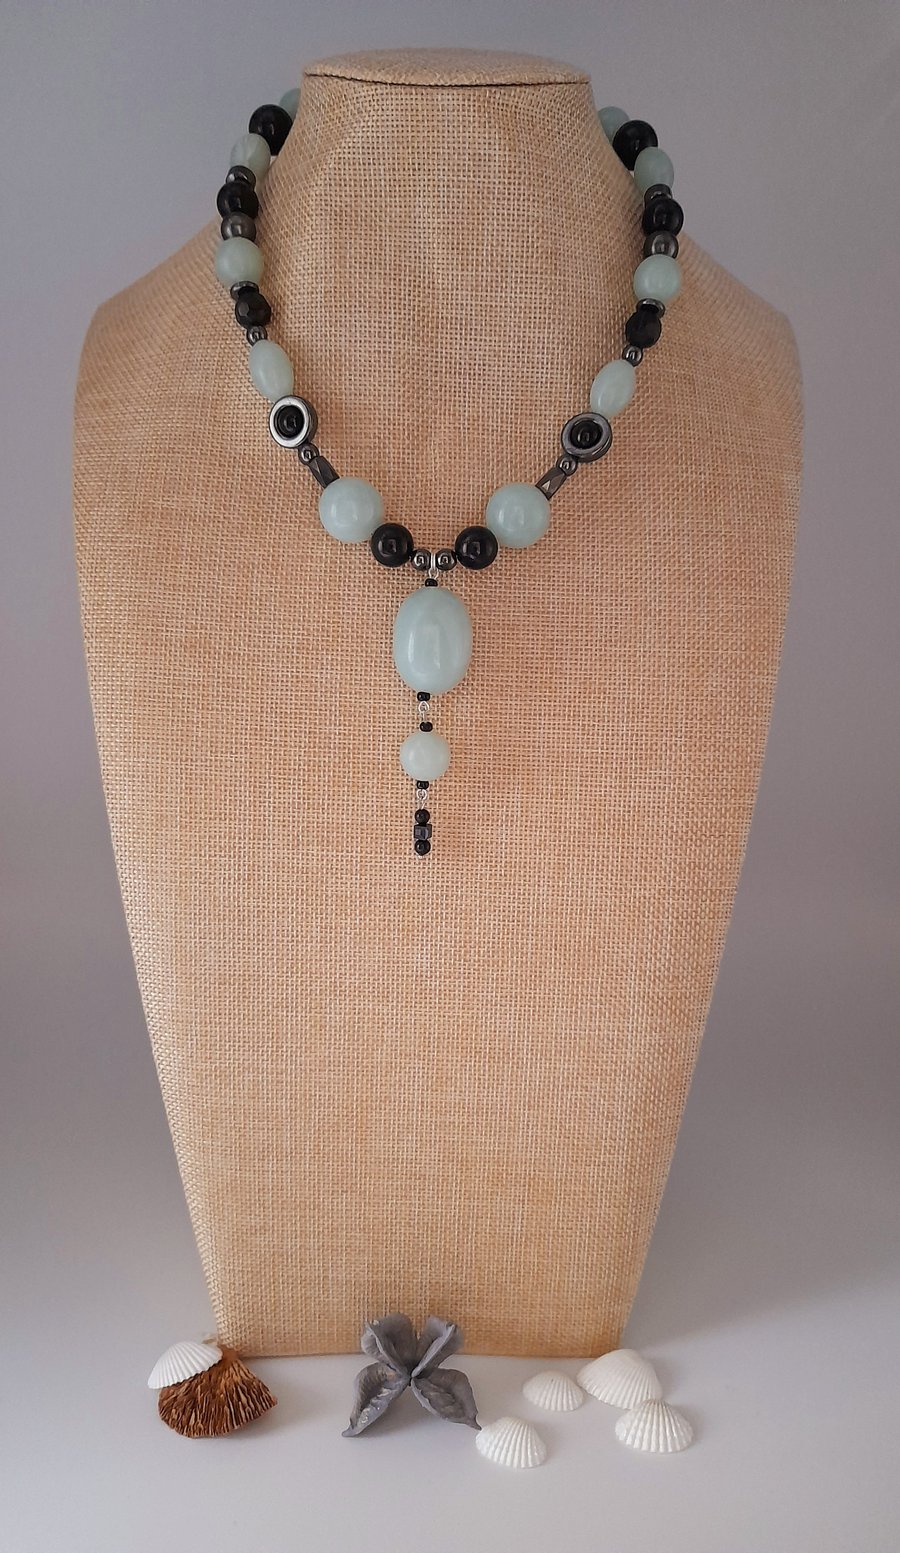 Aqua and black beaded necklace